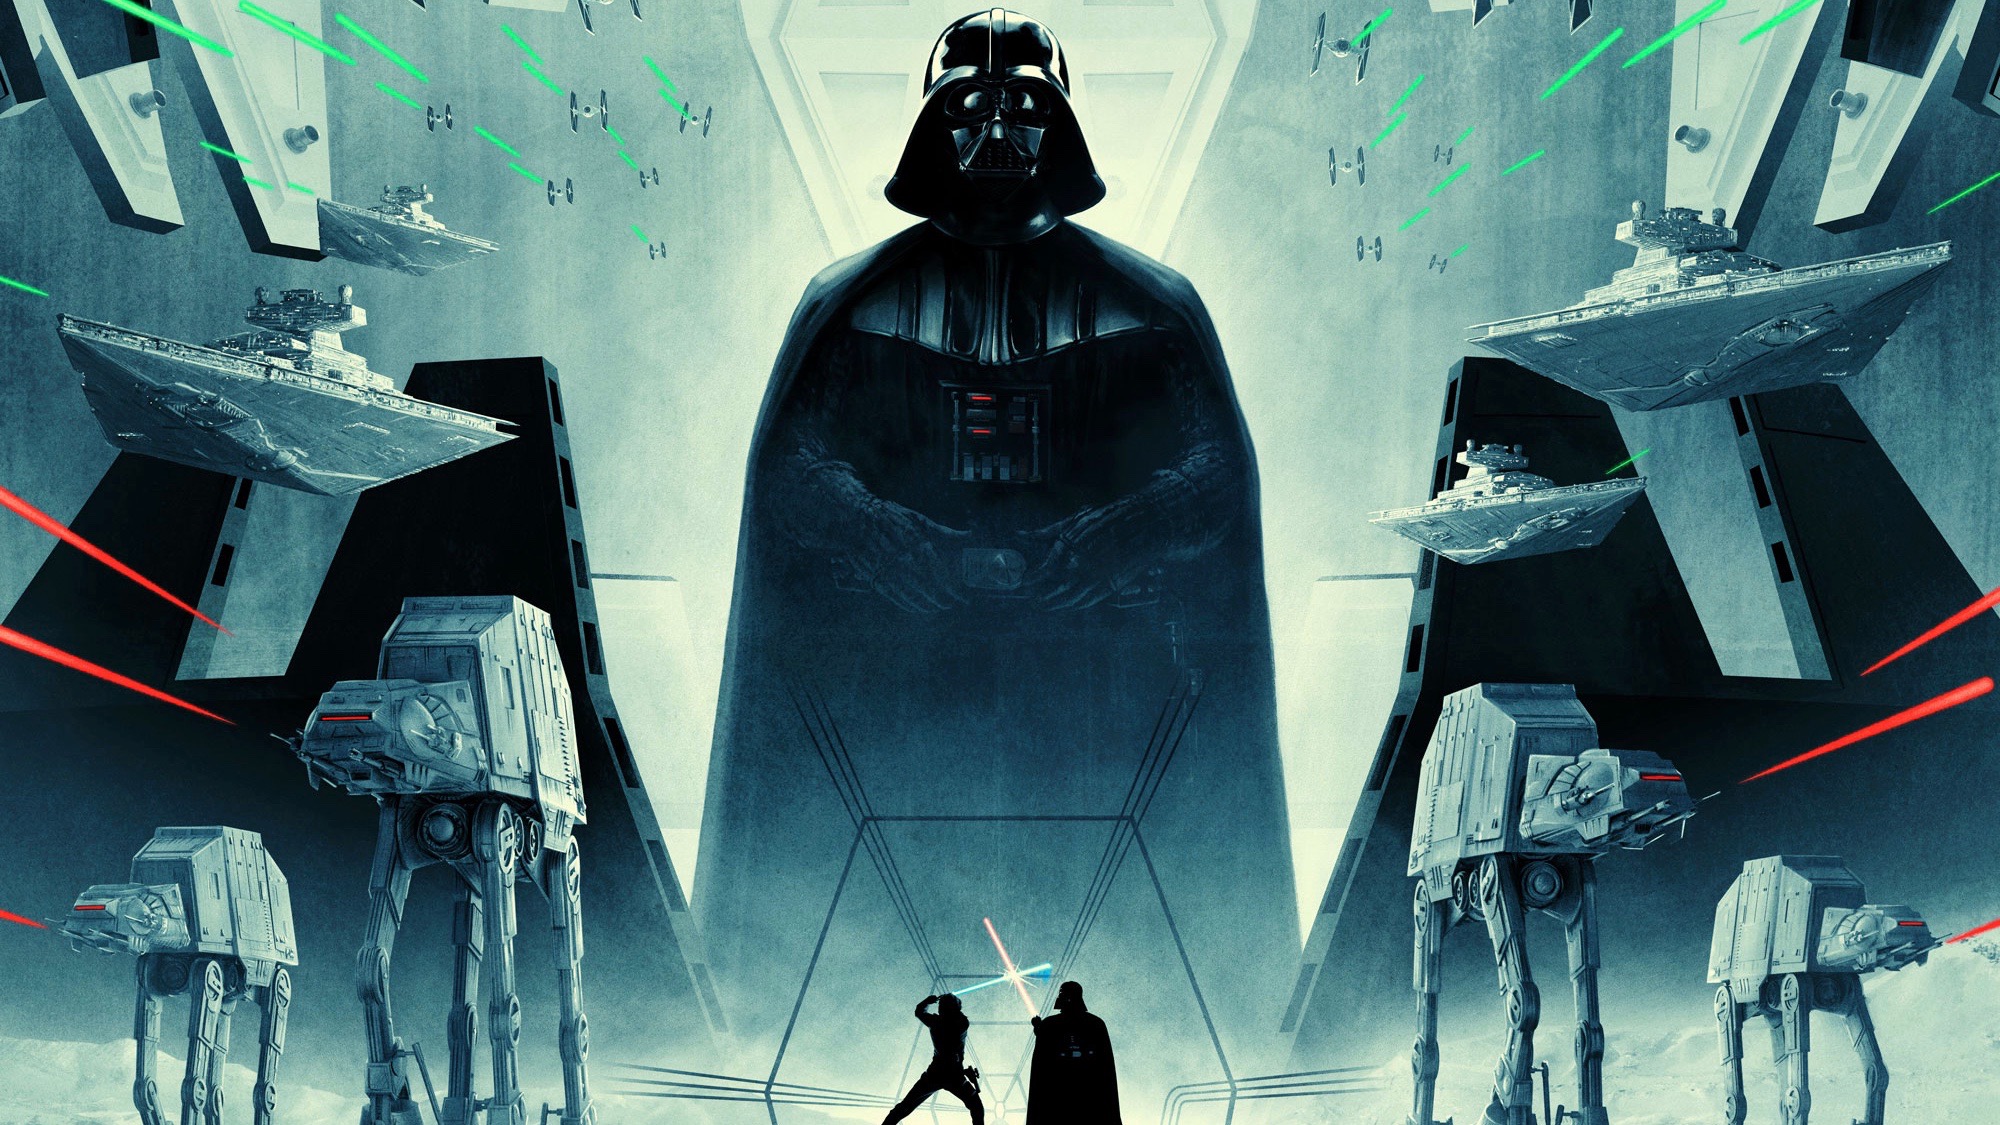 Movie Star Wars Episode V: The Empire Strikes Back HD Wallpaper